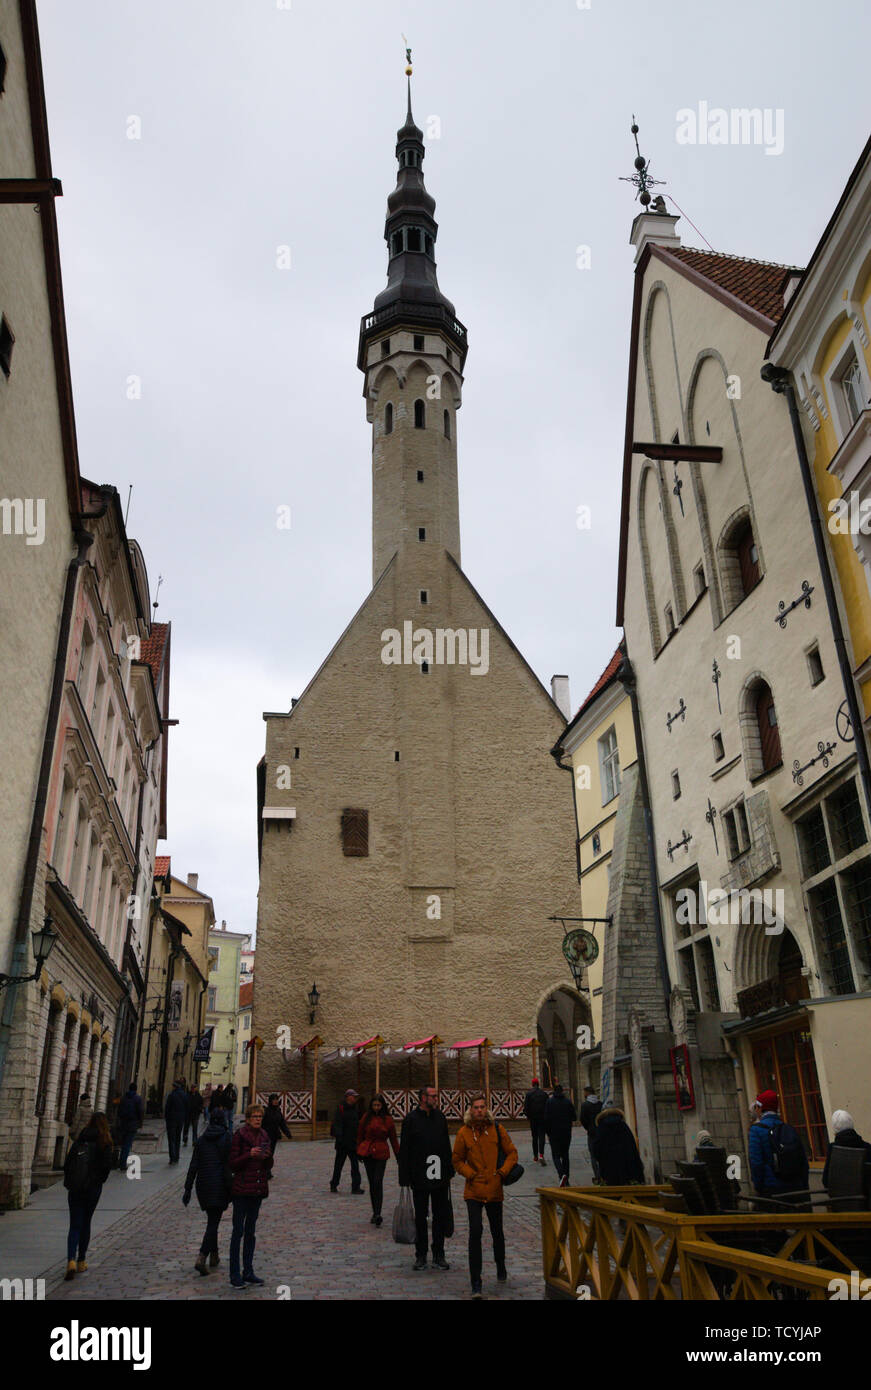 Church steeple in the old town in Tallinn, Estonia Stock Photo